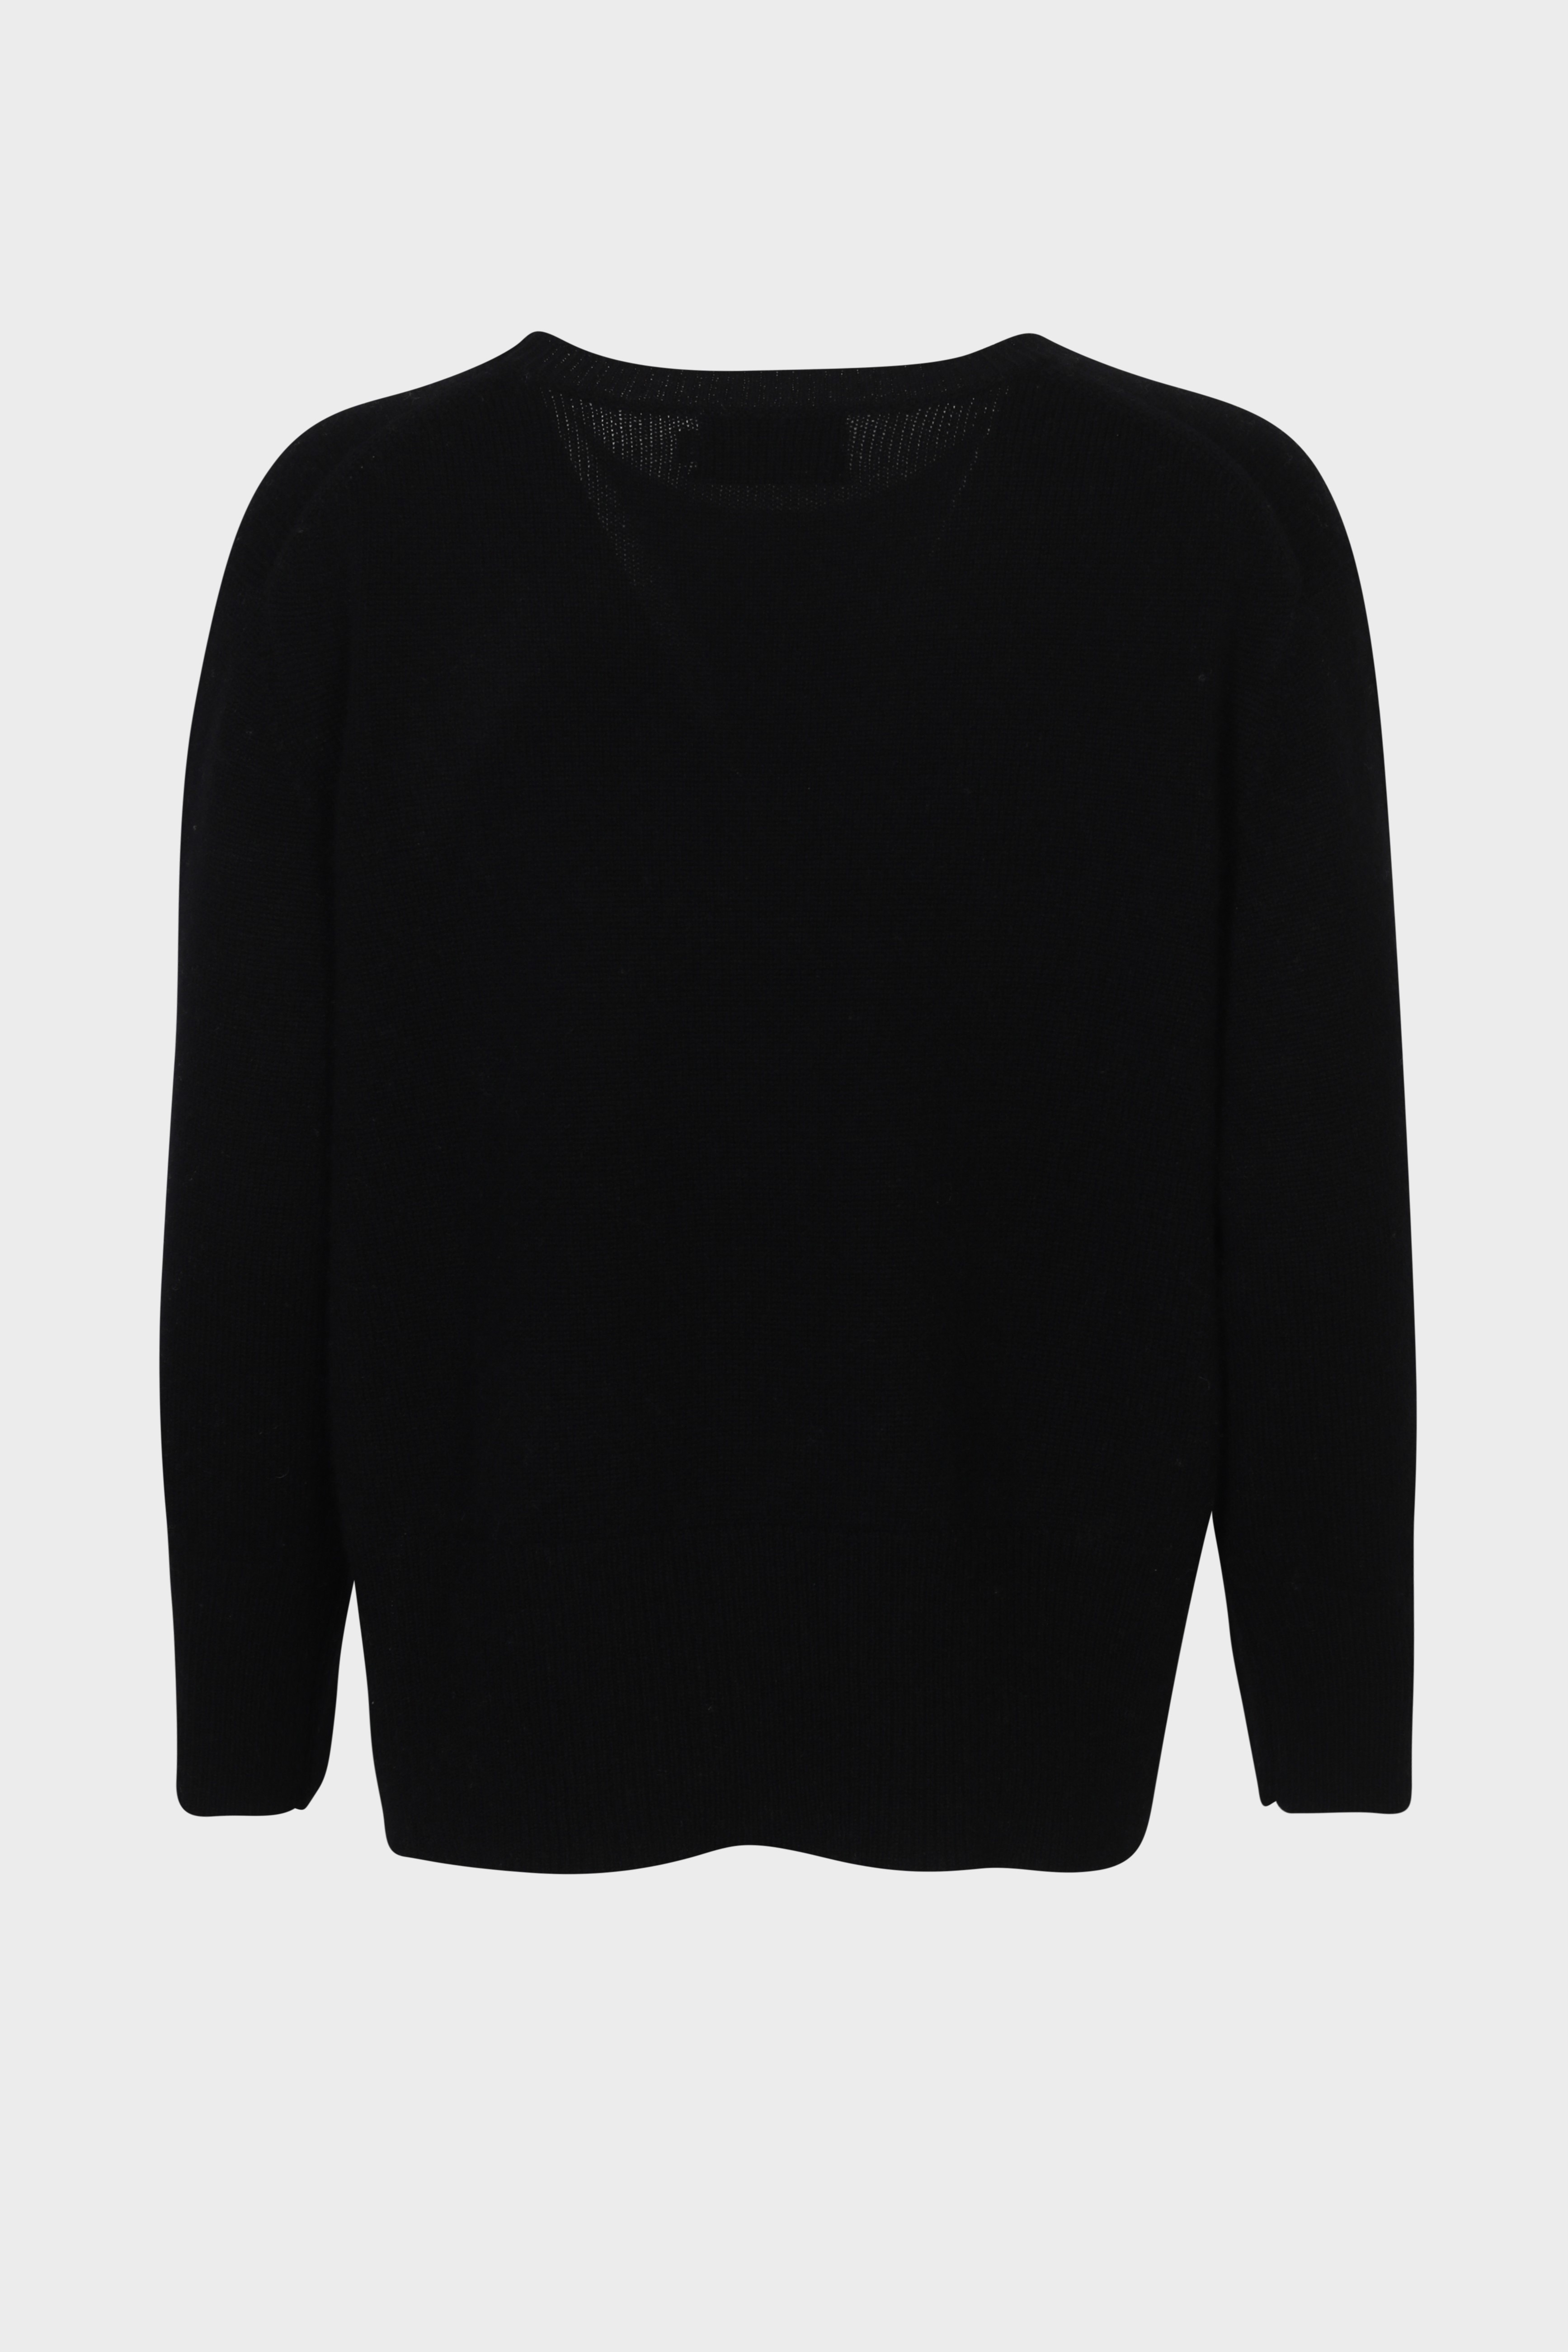 FLONA Cashmere Sweater in Black S